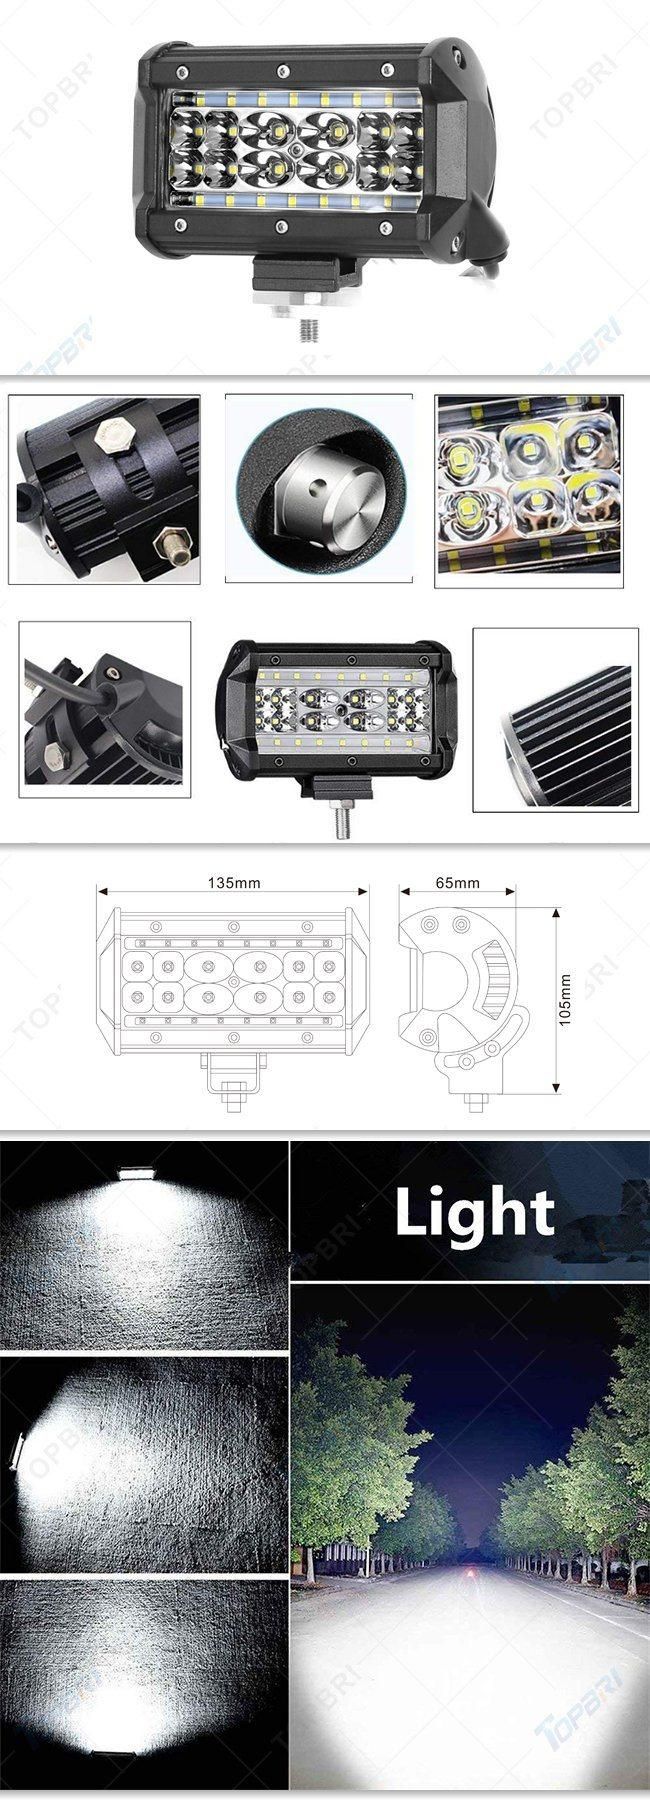 5" High-Quakeproof Auto Light 45W LED Truck Work Light